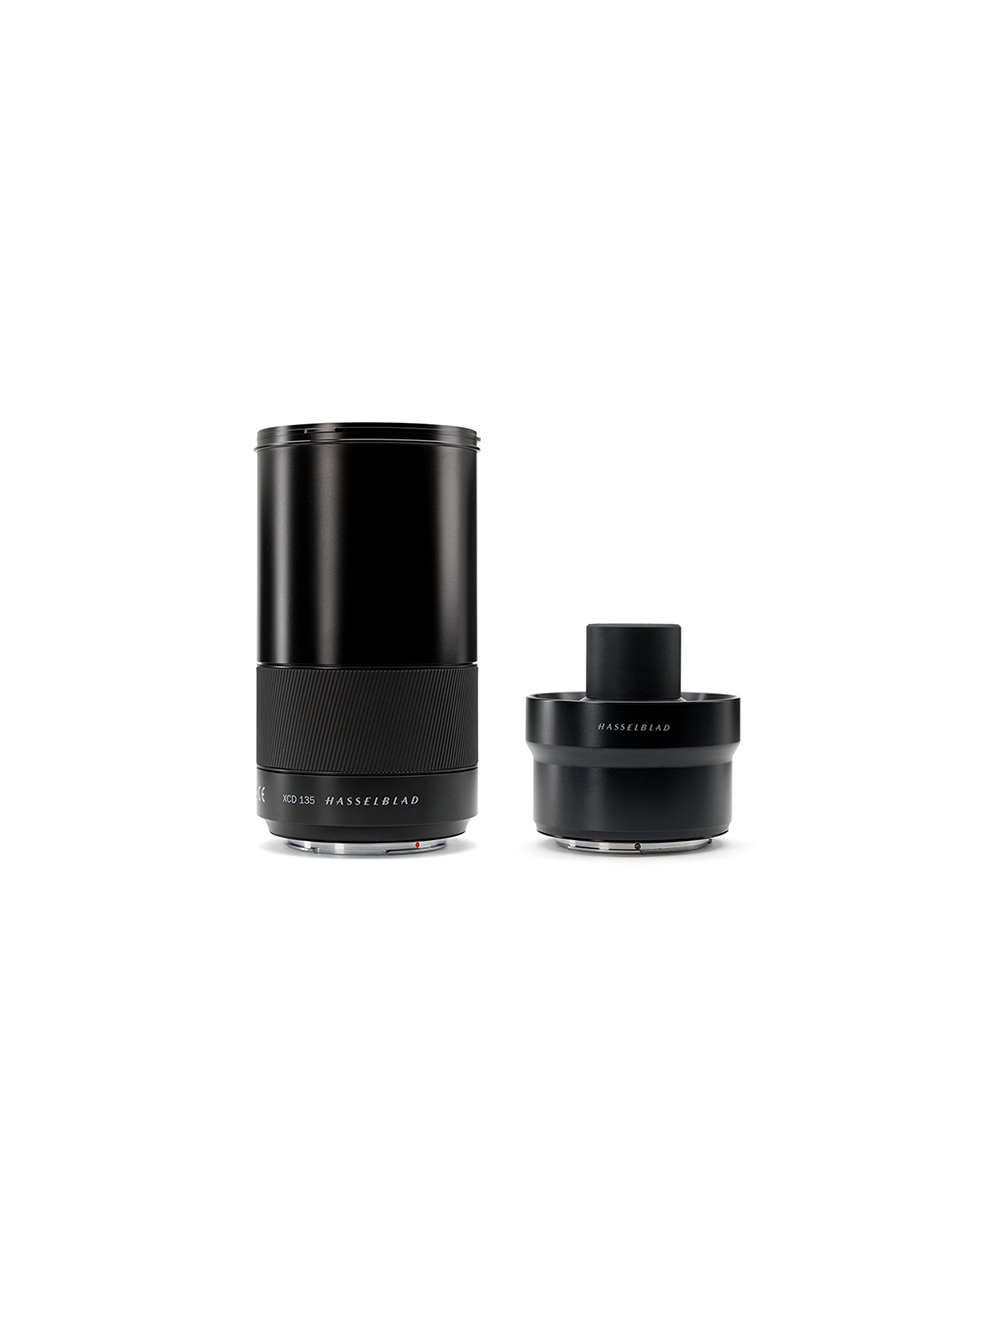 Hasselblad XCD 135 mm f/2.8 Black X Converter 1.7X Lens 